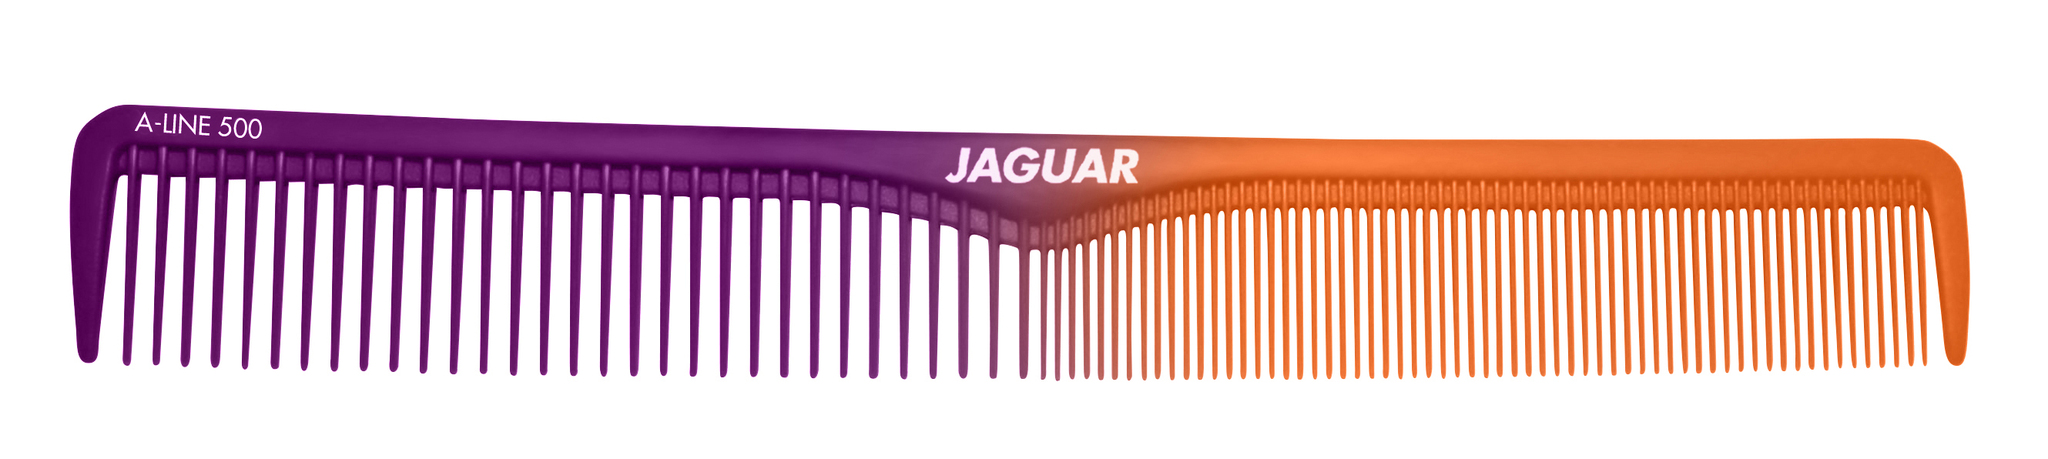 Jaguar ERGO Saxset Slice "The Stage Is Yours"